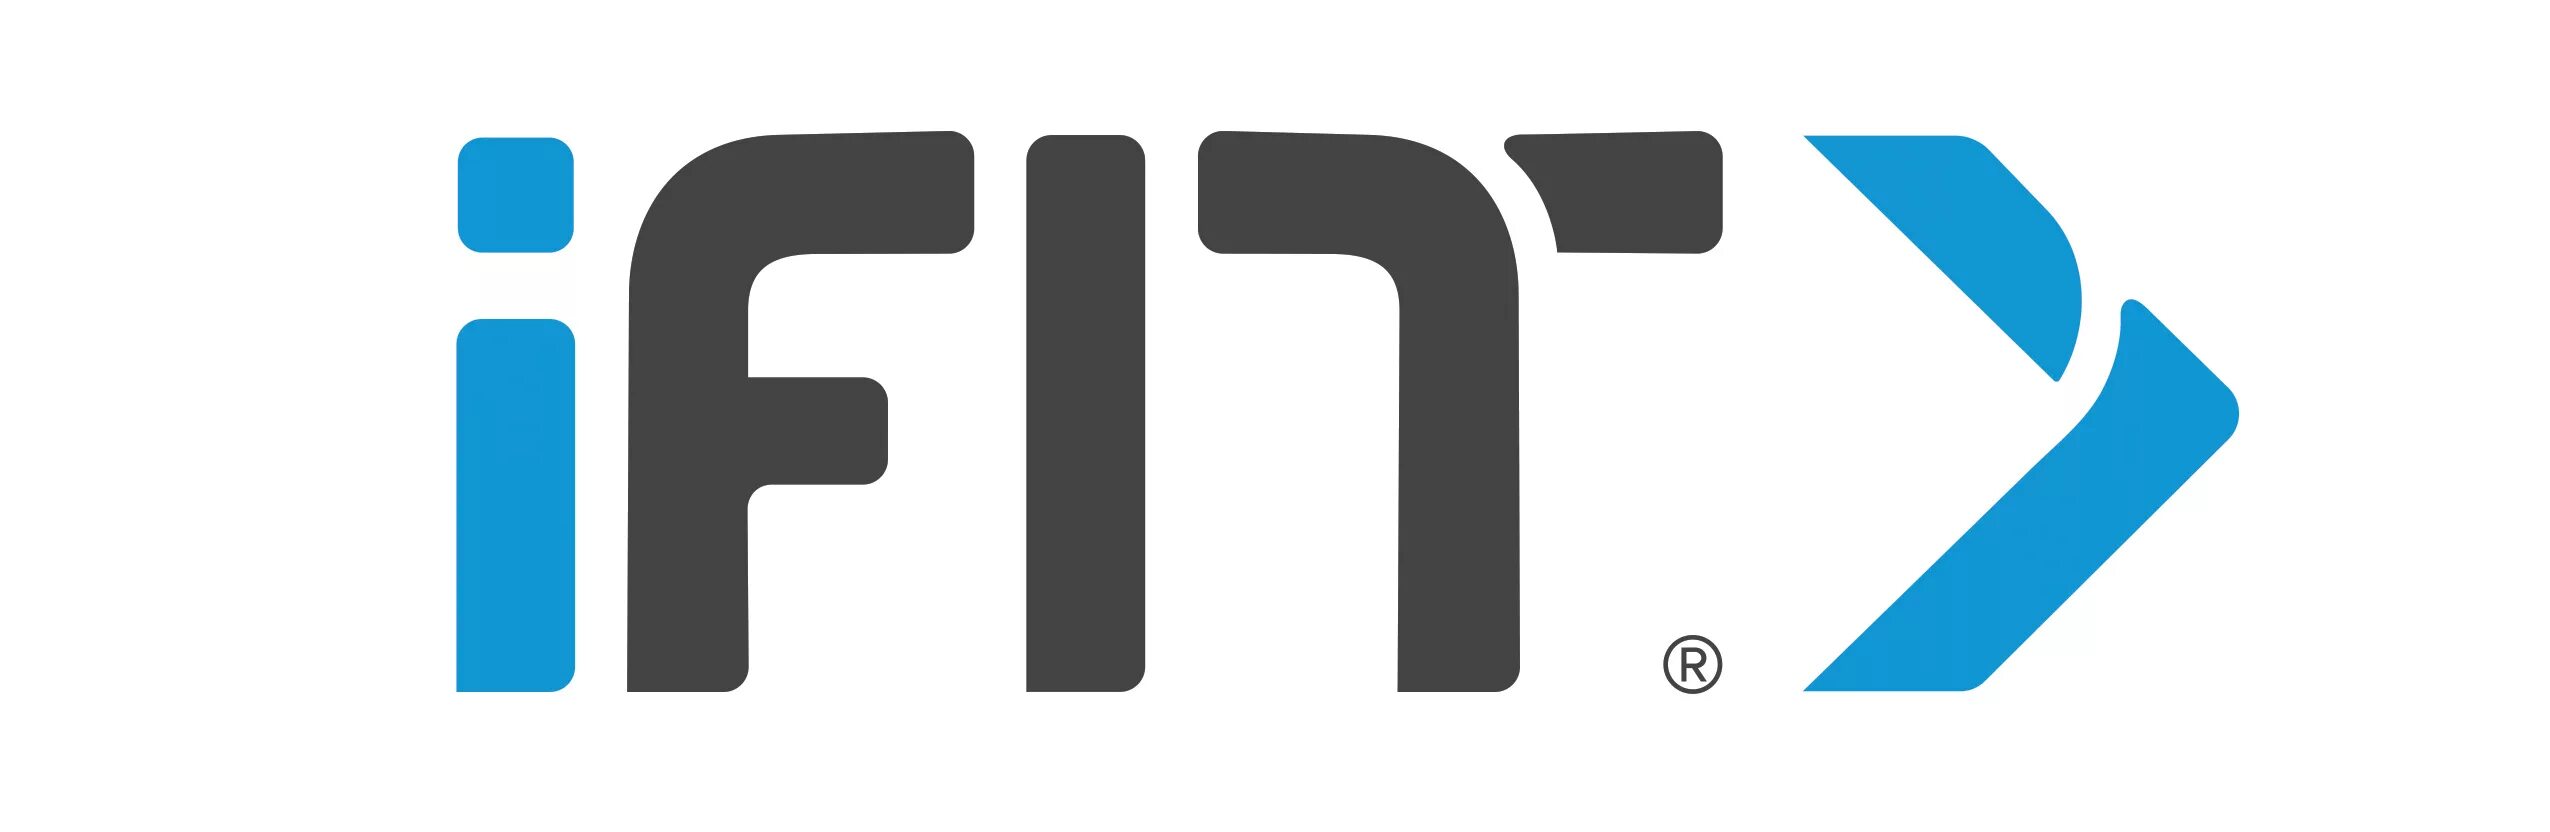 Ifit. Браслет IFIT vue. Бренд тренажеров Leistung логотип. Бренд тренажеров Alilife логотип.